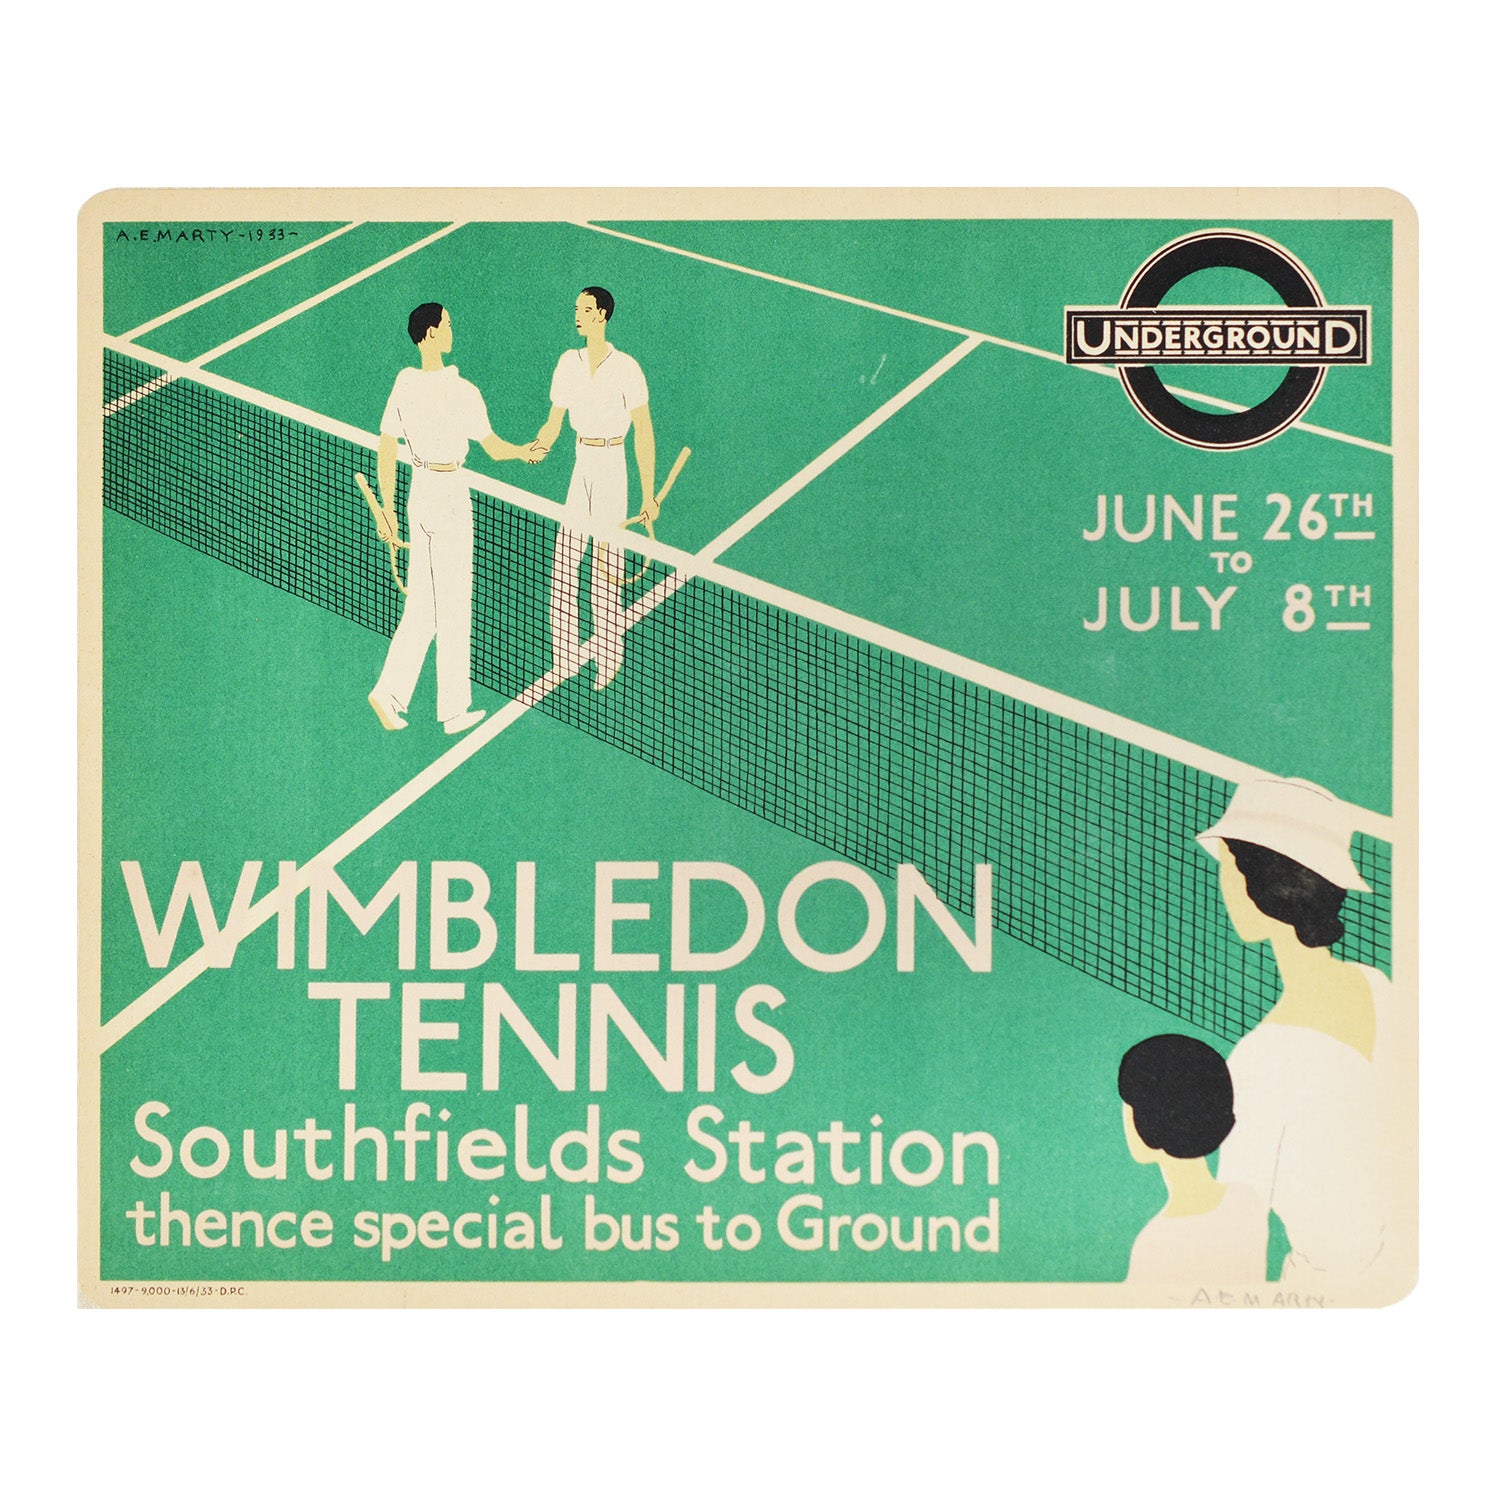 Wimbledon Tennis, Southfields Station